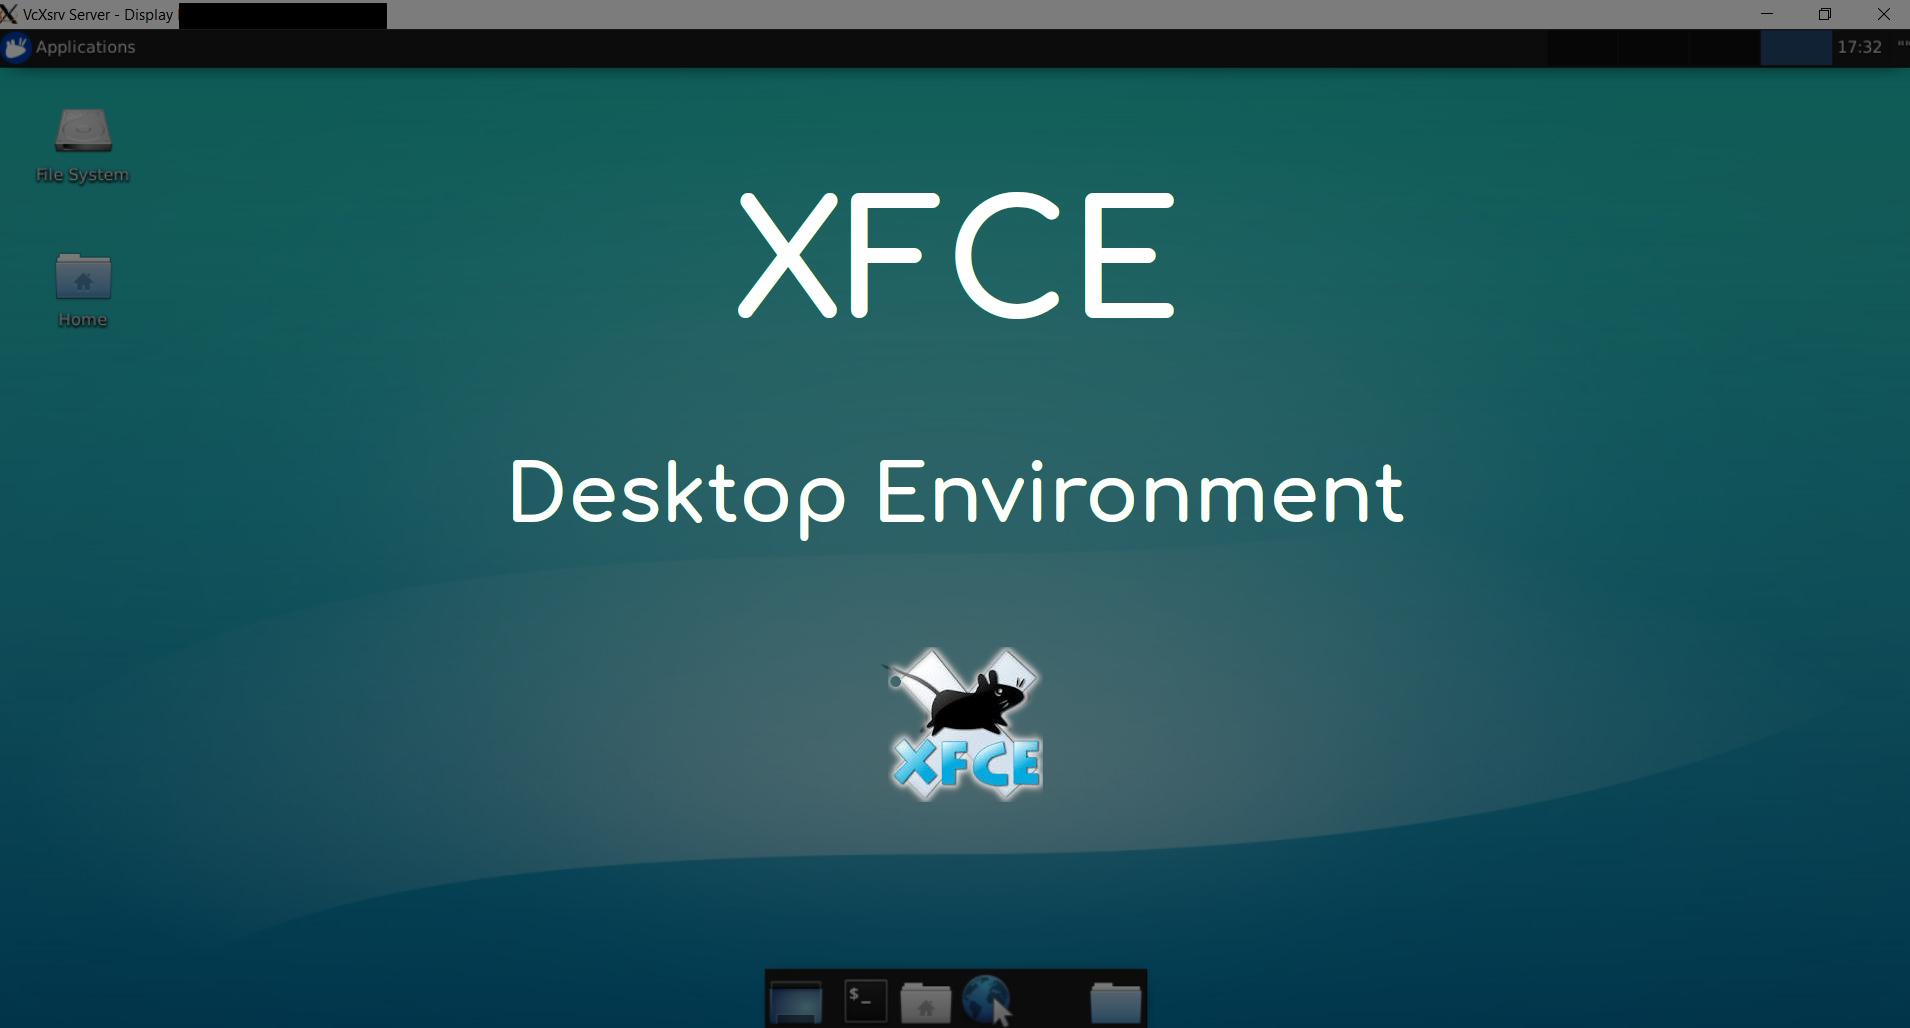 Lightweight desktop environment XFCE and it’s features